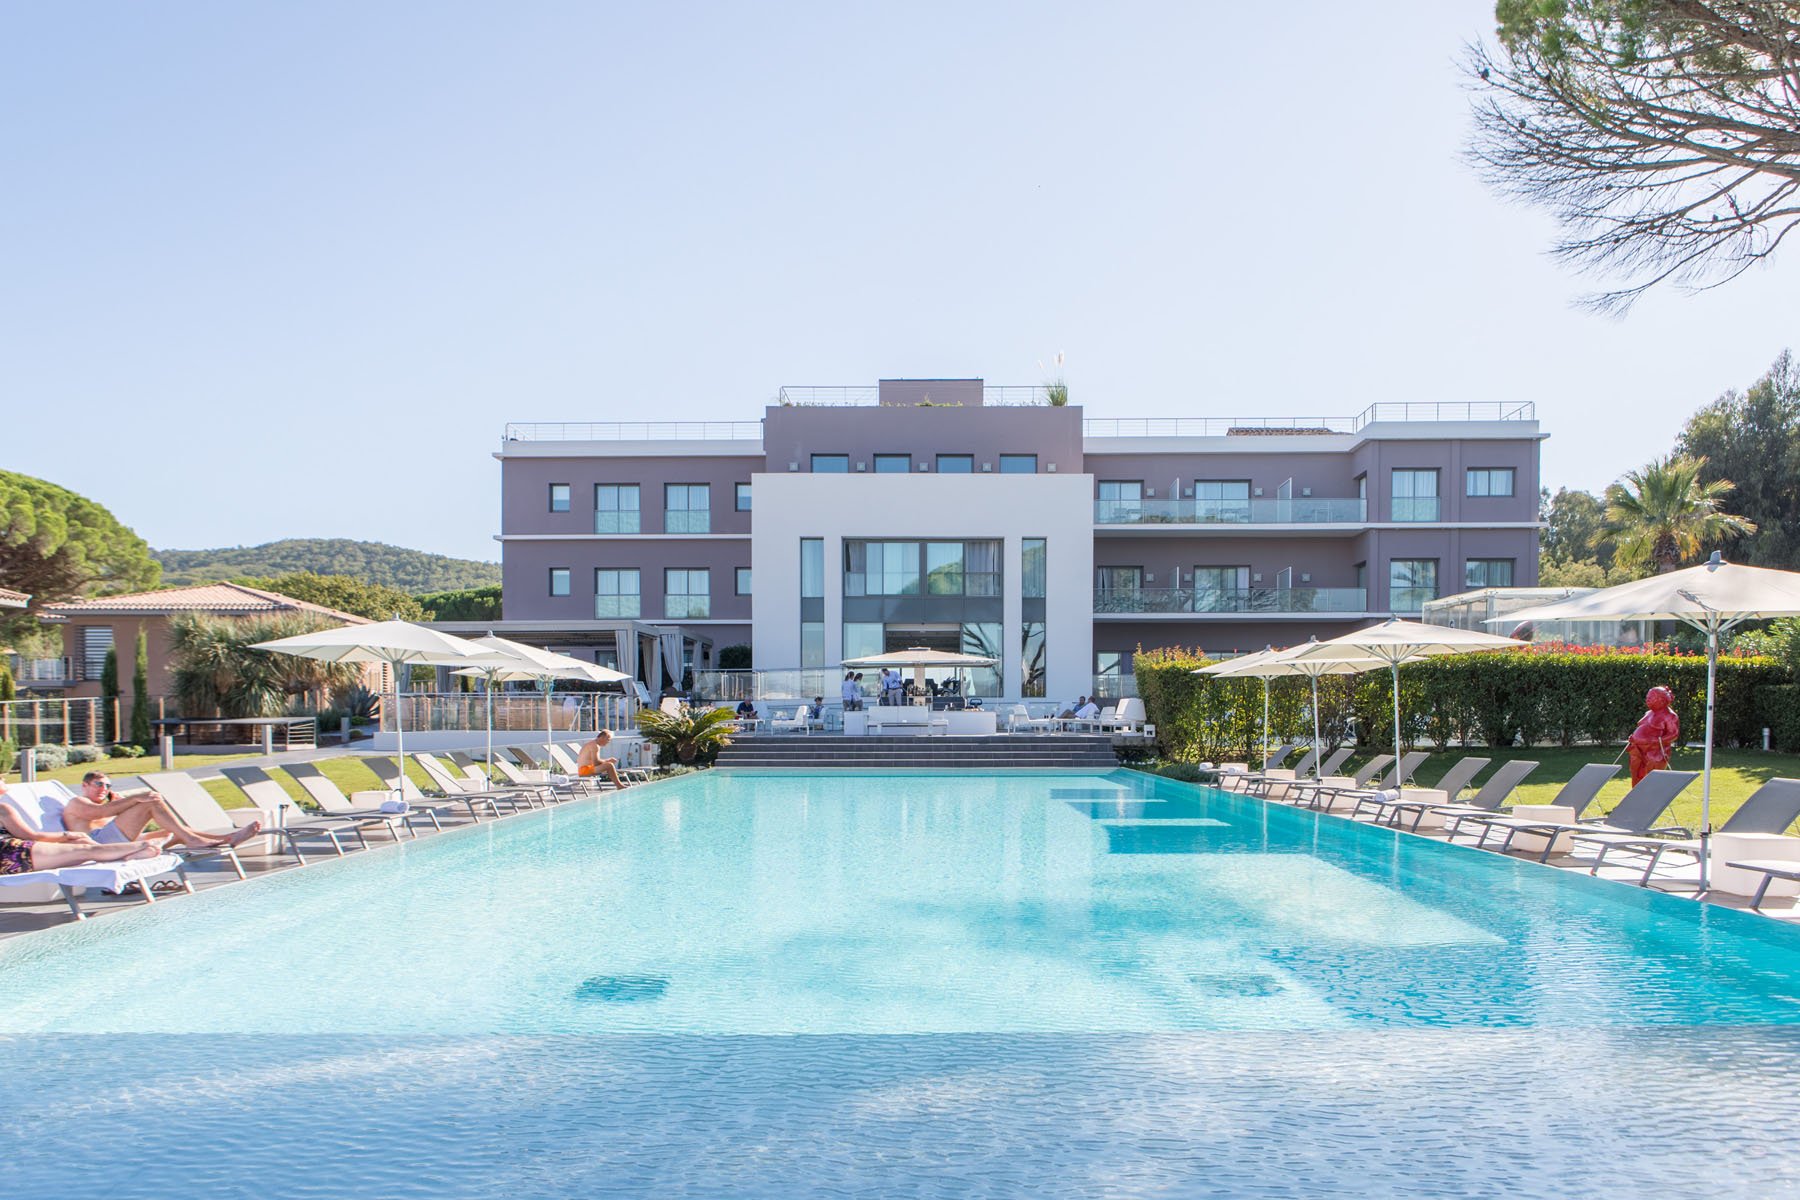 XL Pool - Kube Hotel Saint-Tropez - South of France